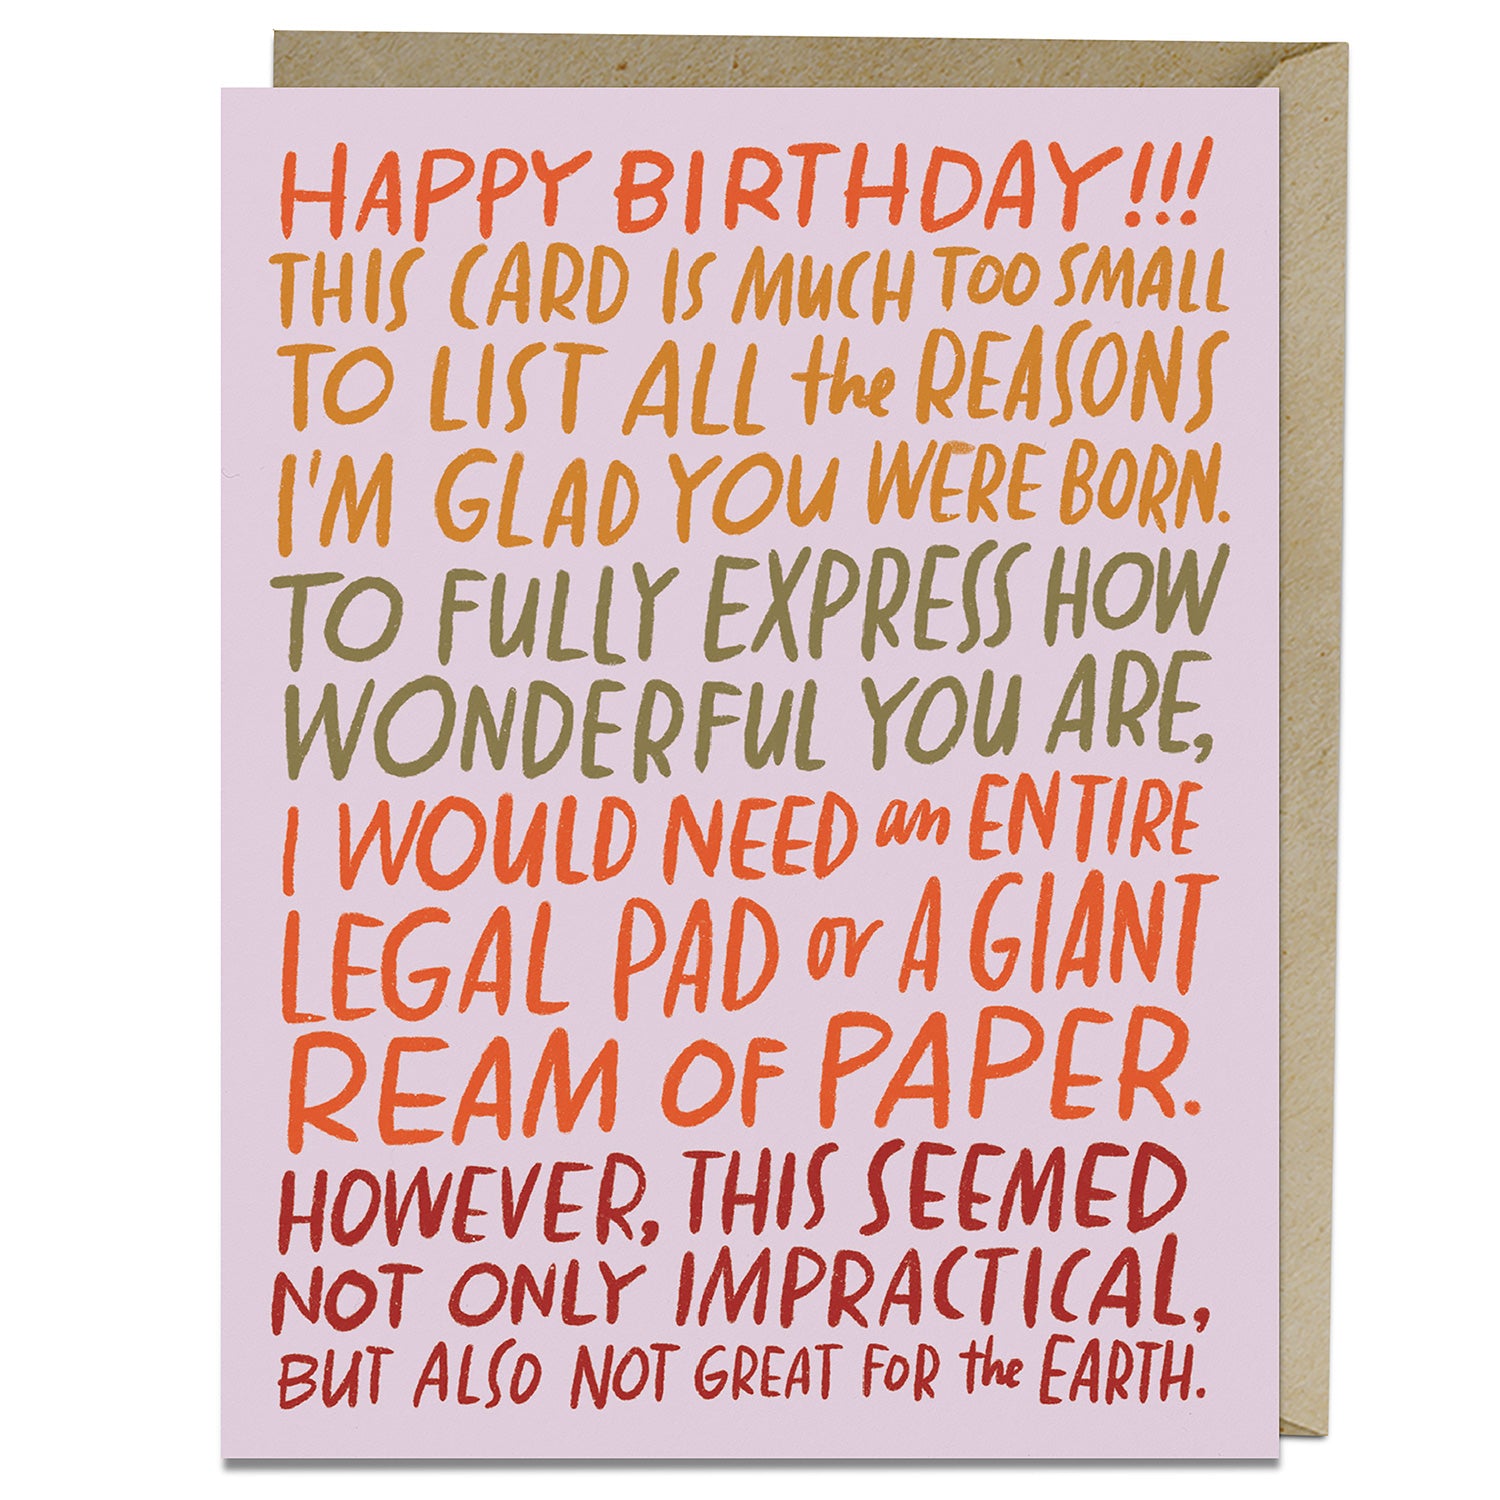 funny birthday card for women